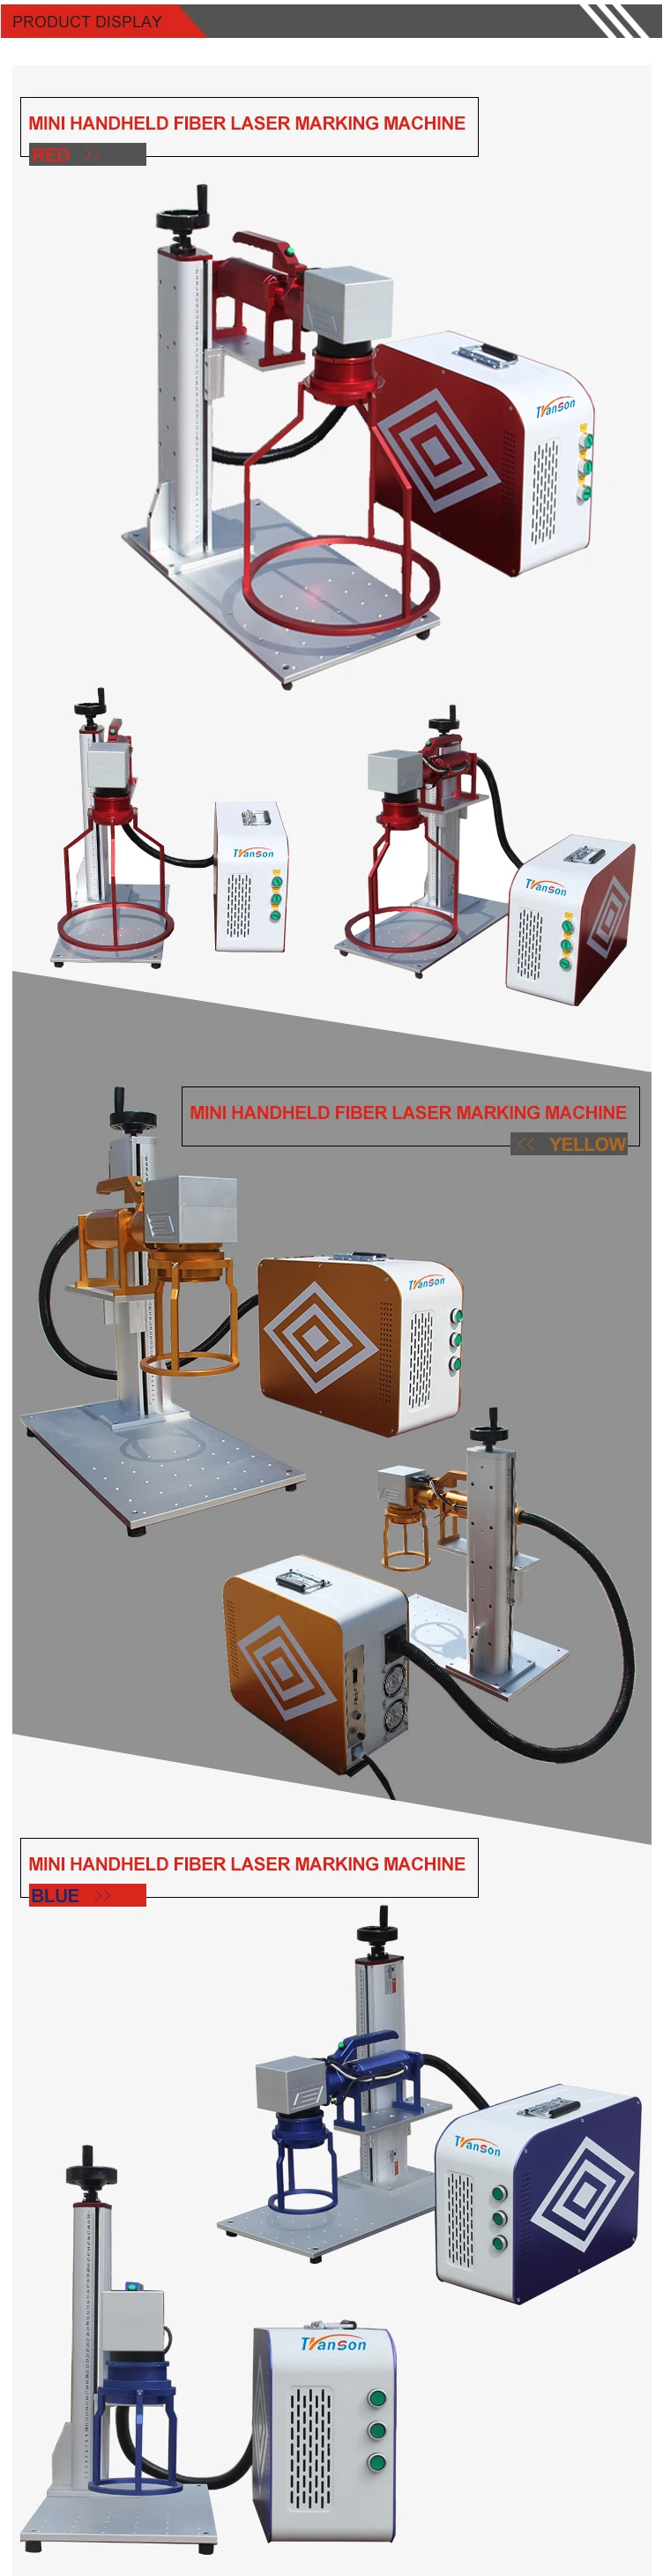 Transon 20W  Fiber laser Marking Machine Handheld Type for Metal and Nonmetal